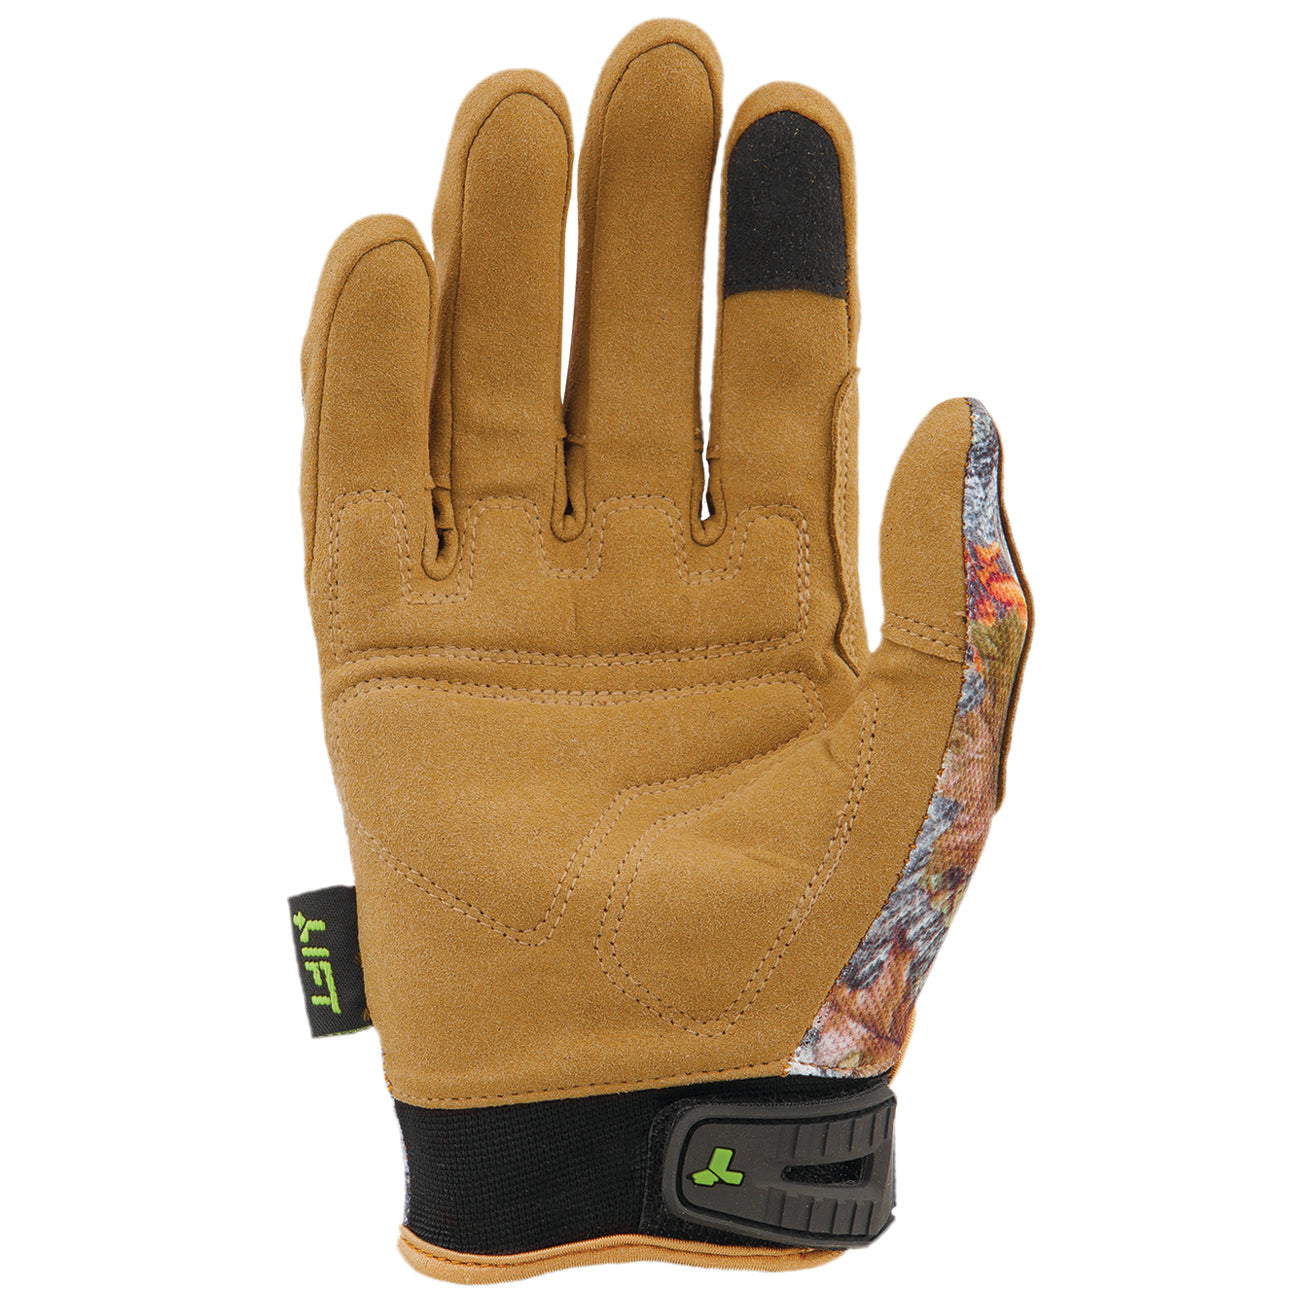 LIFT Safety - OPTION Glove (Camo)